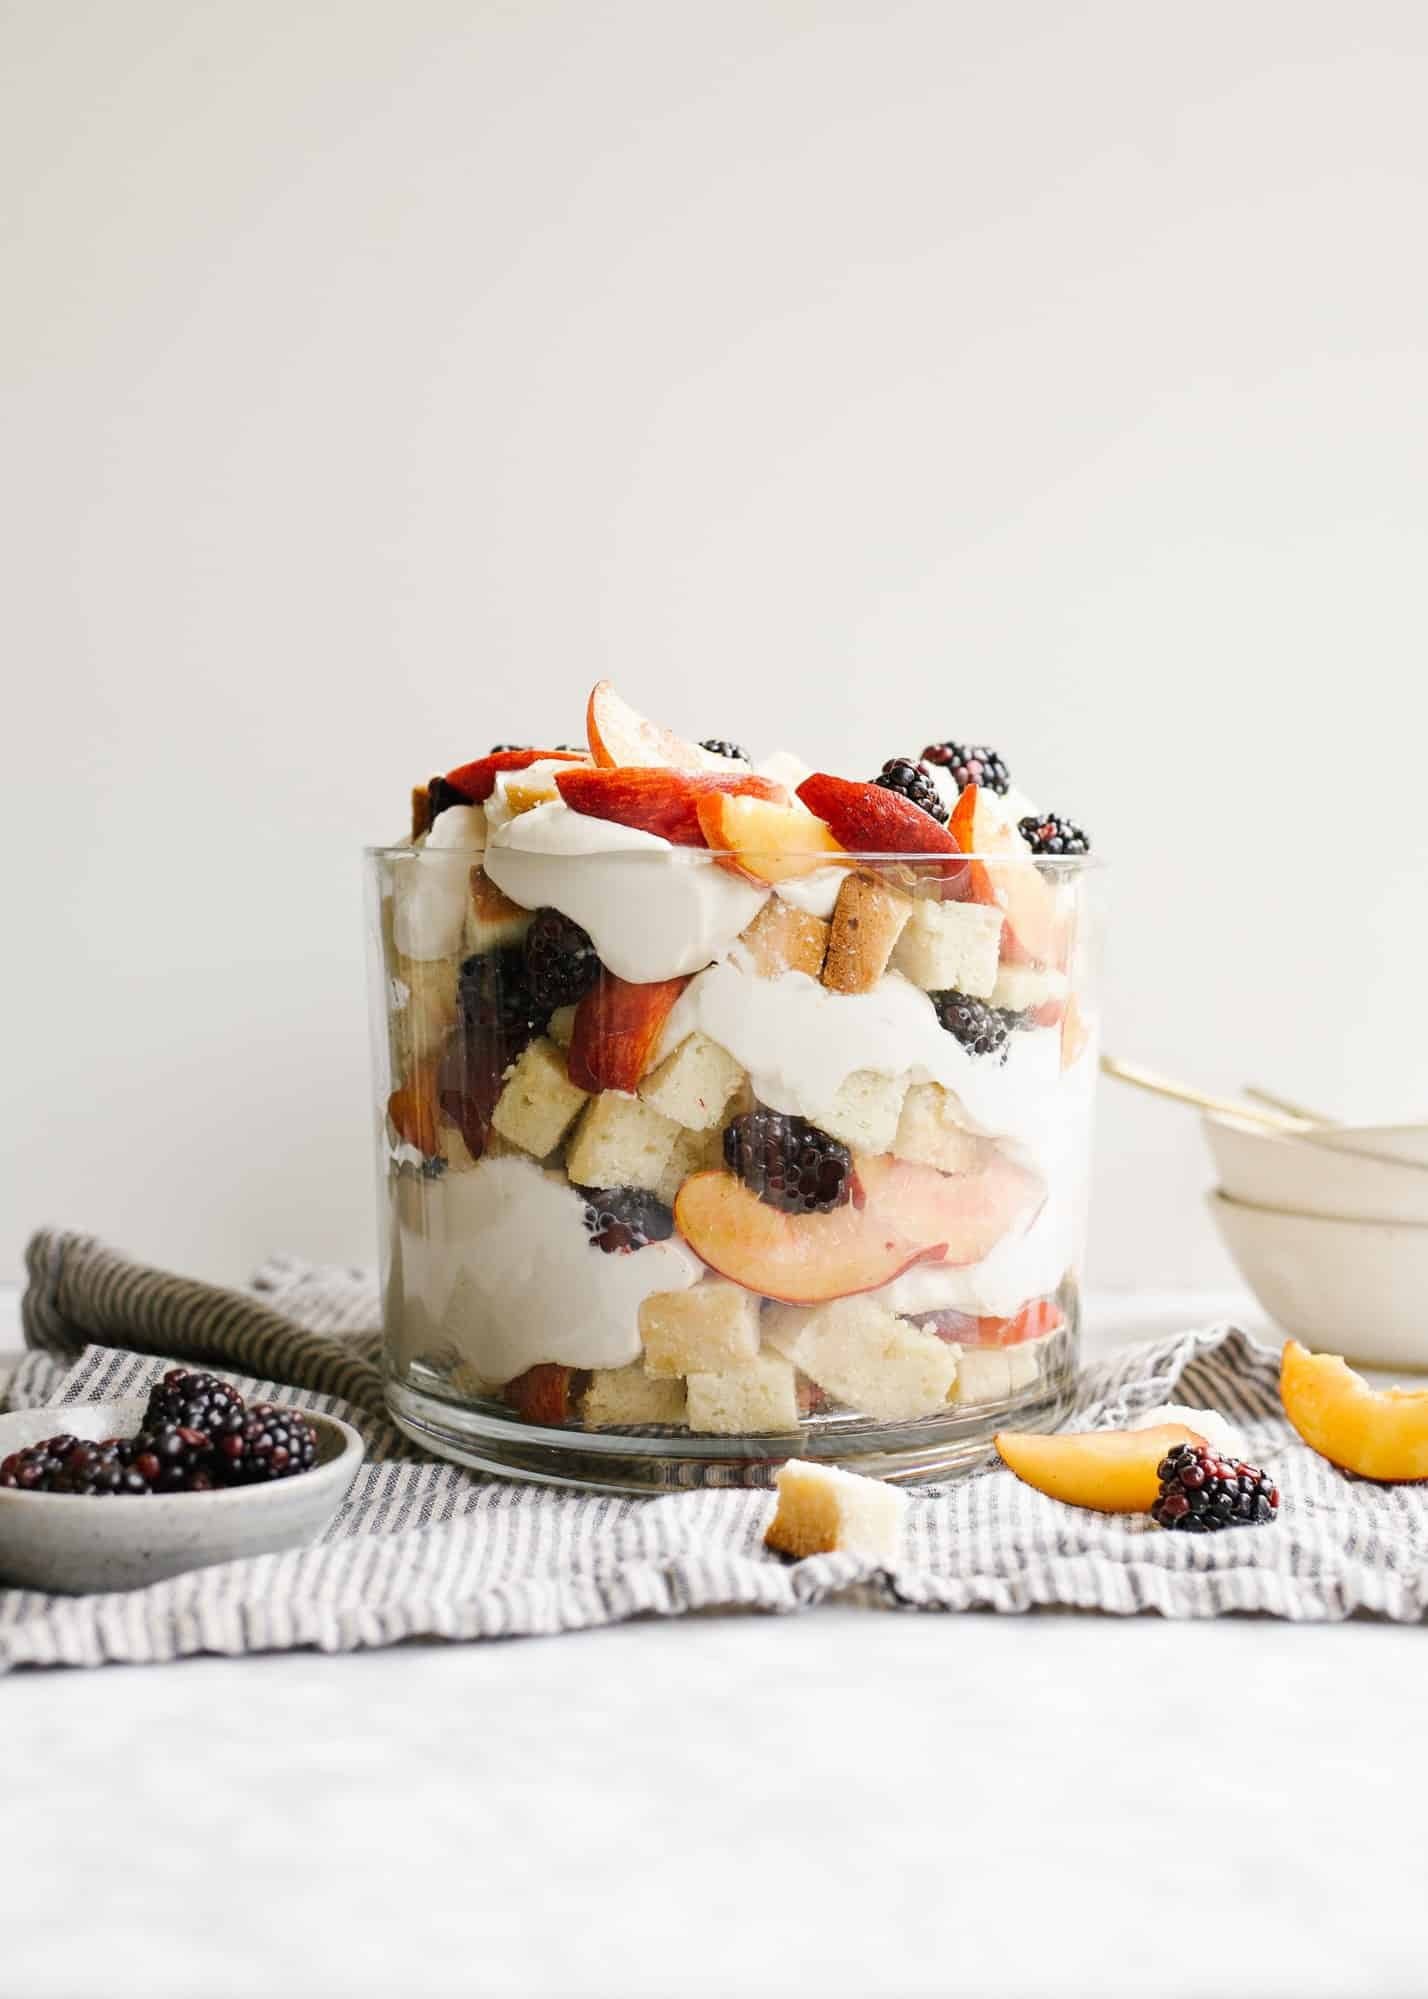 Barefoot Contessa Trifle Dessert - The 21 Best Ideas For ...